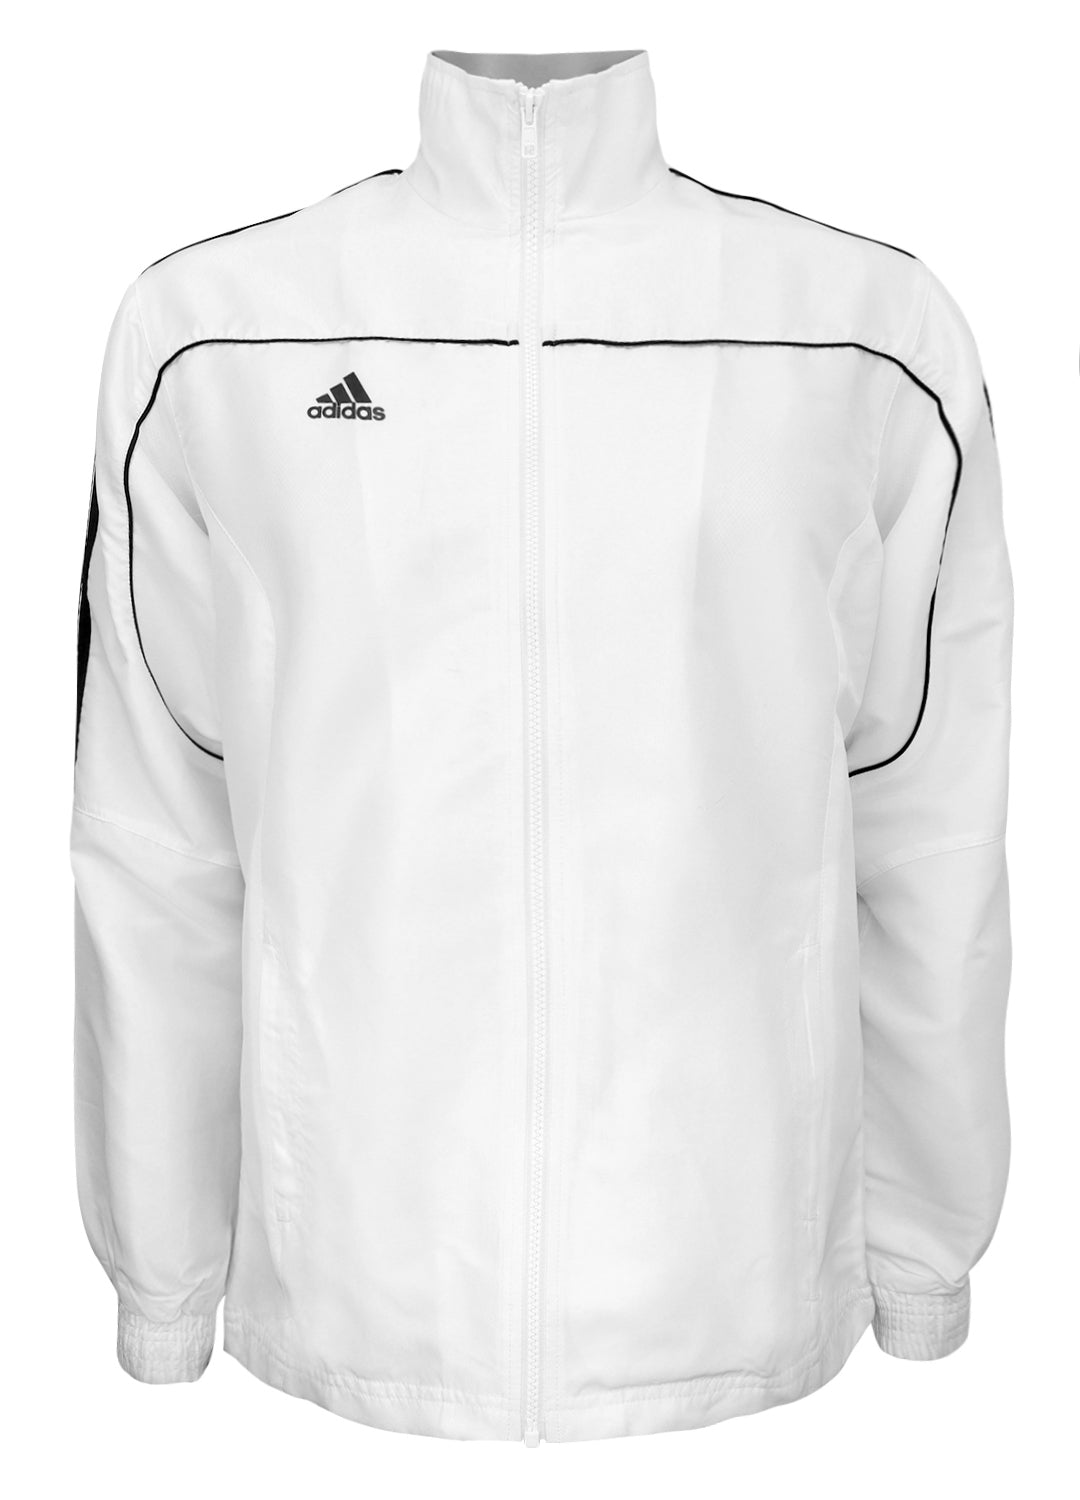 adidas white jacket with black stripes